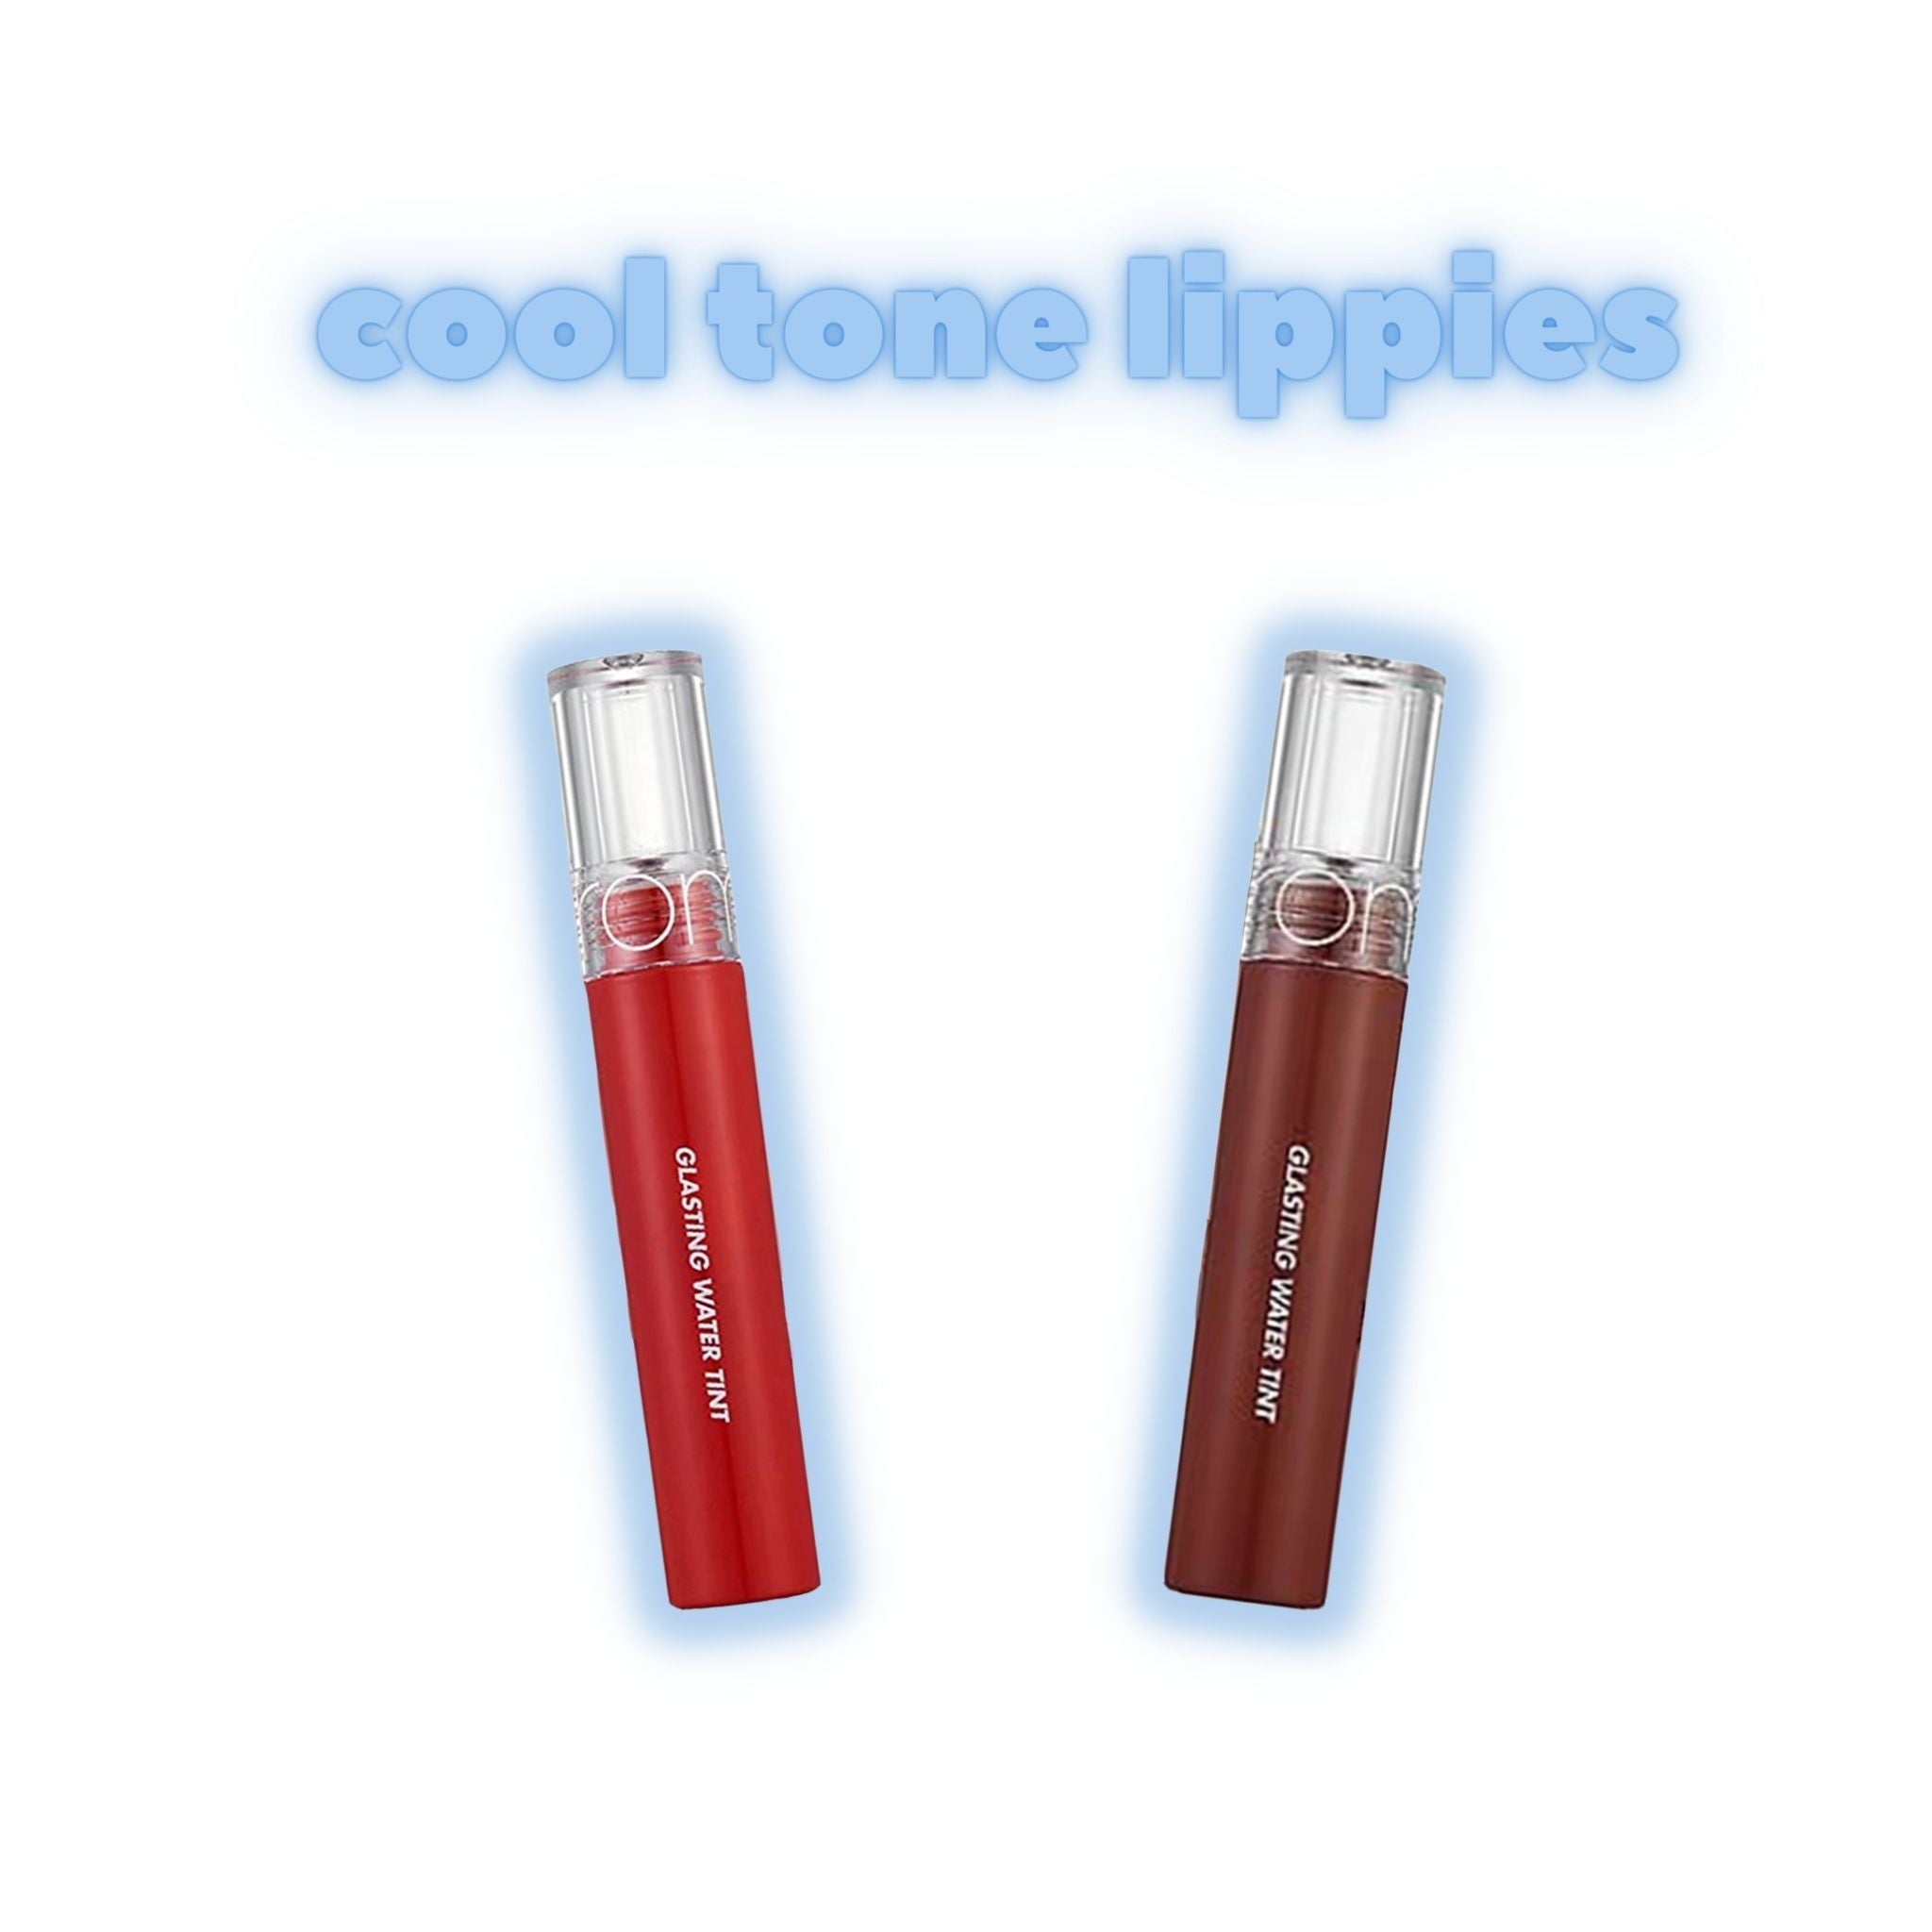 Cool-tone lippies (2PC)